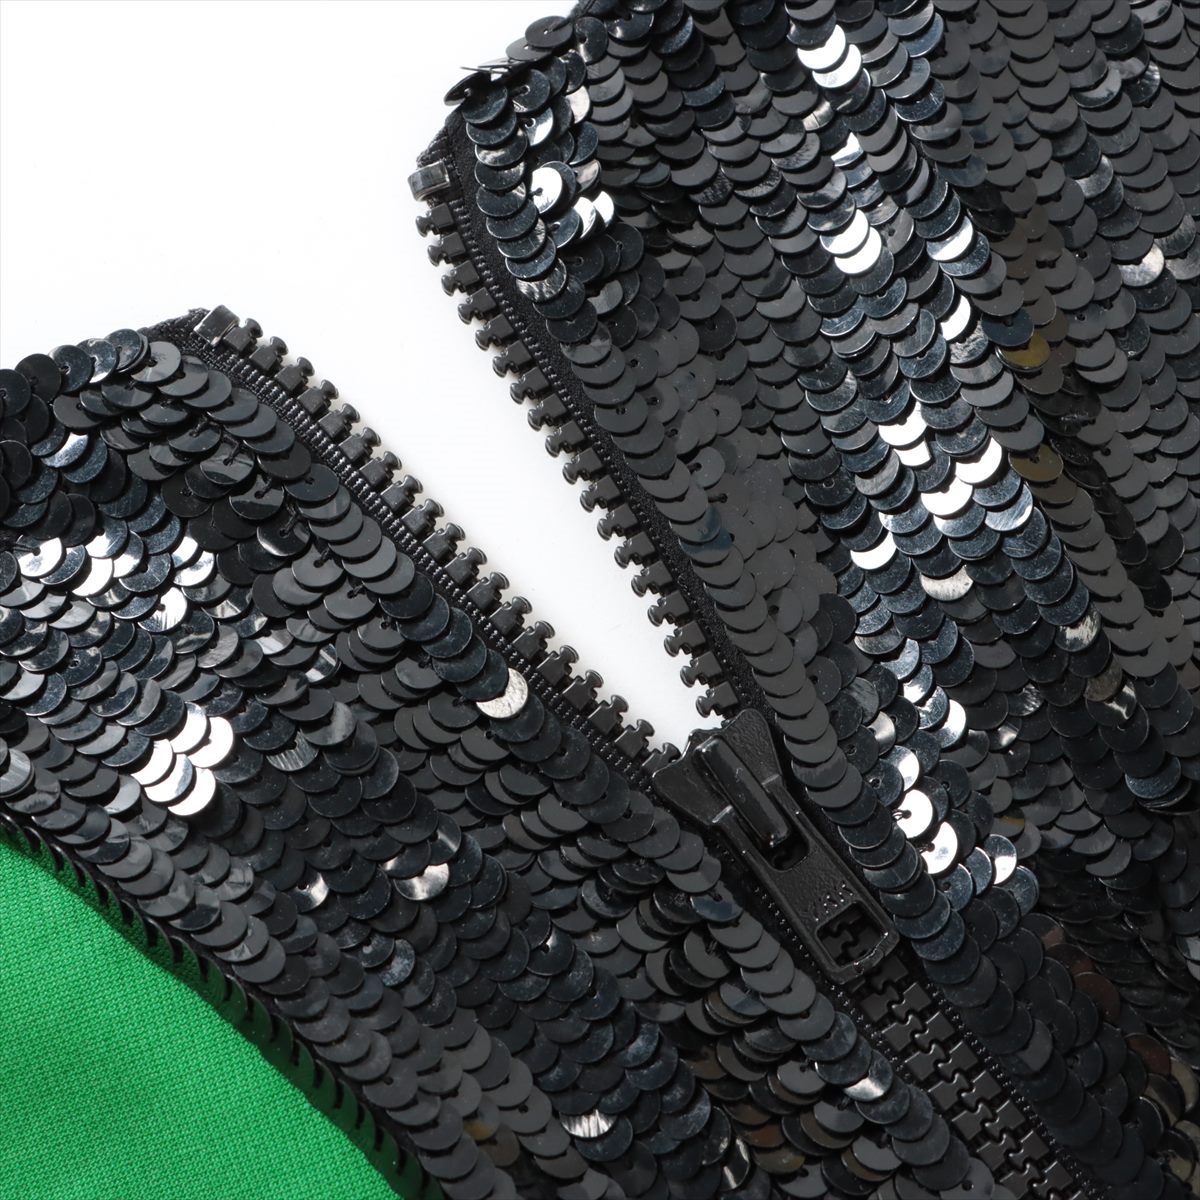 Emilio Pucci Rayon × Silk Dress IT40 Ladies' Black x green  Sequins 41RH37